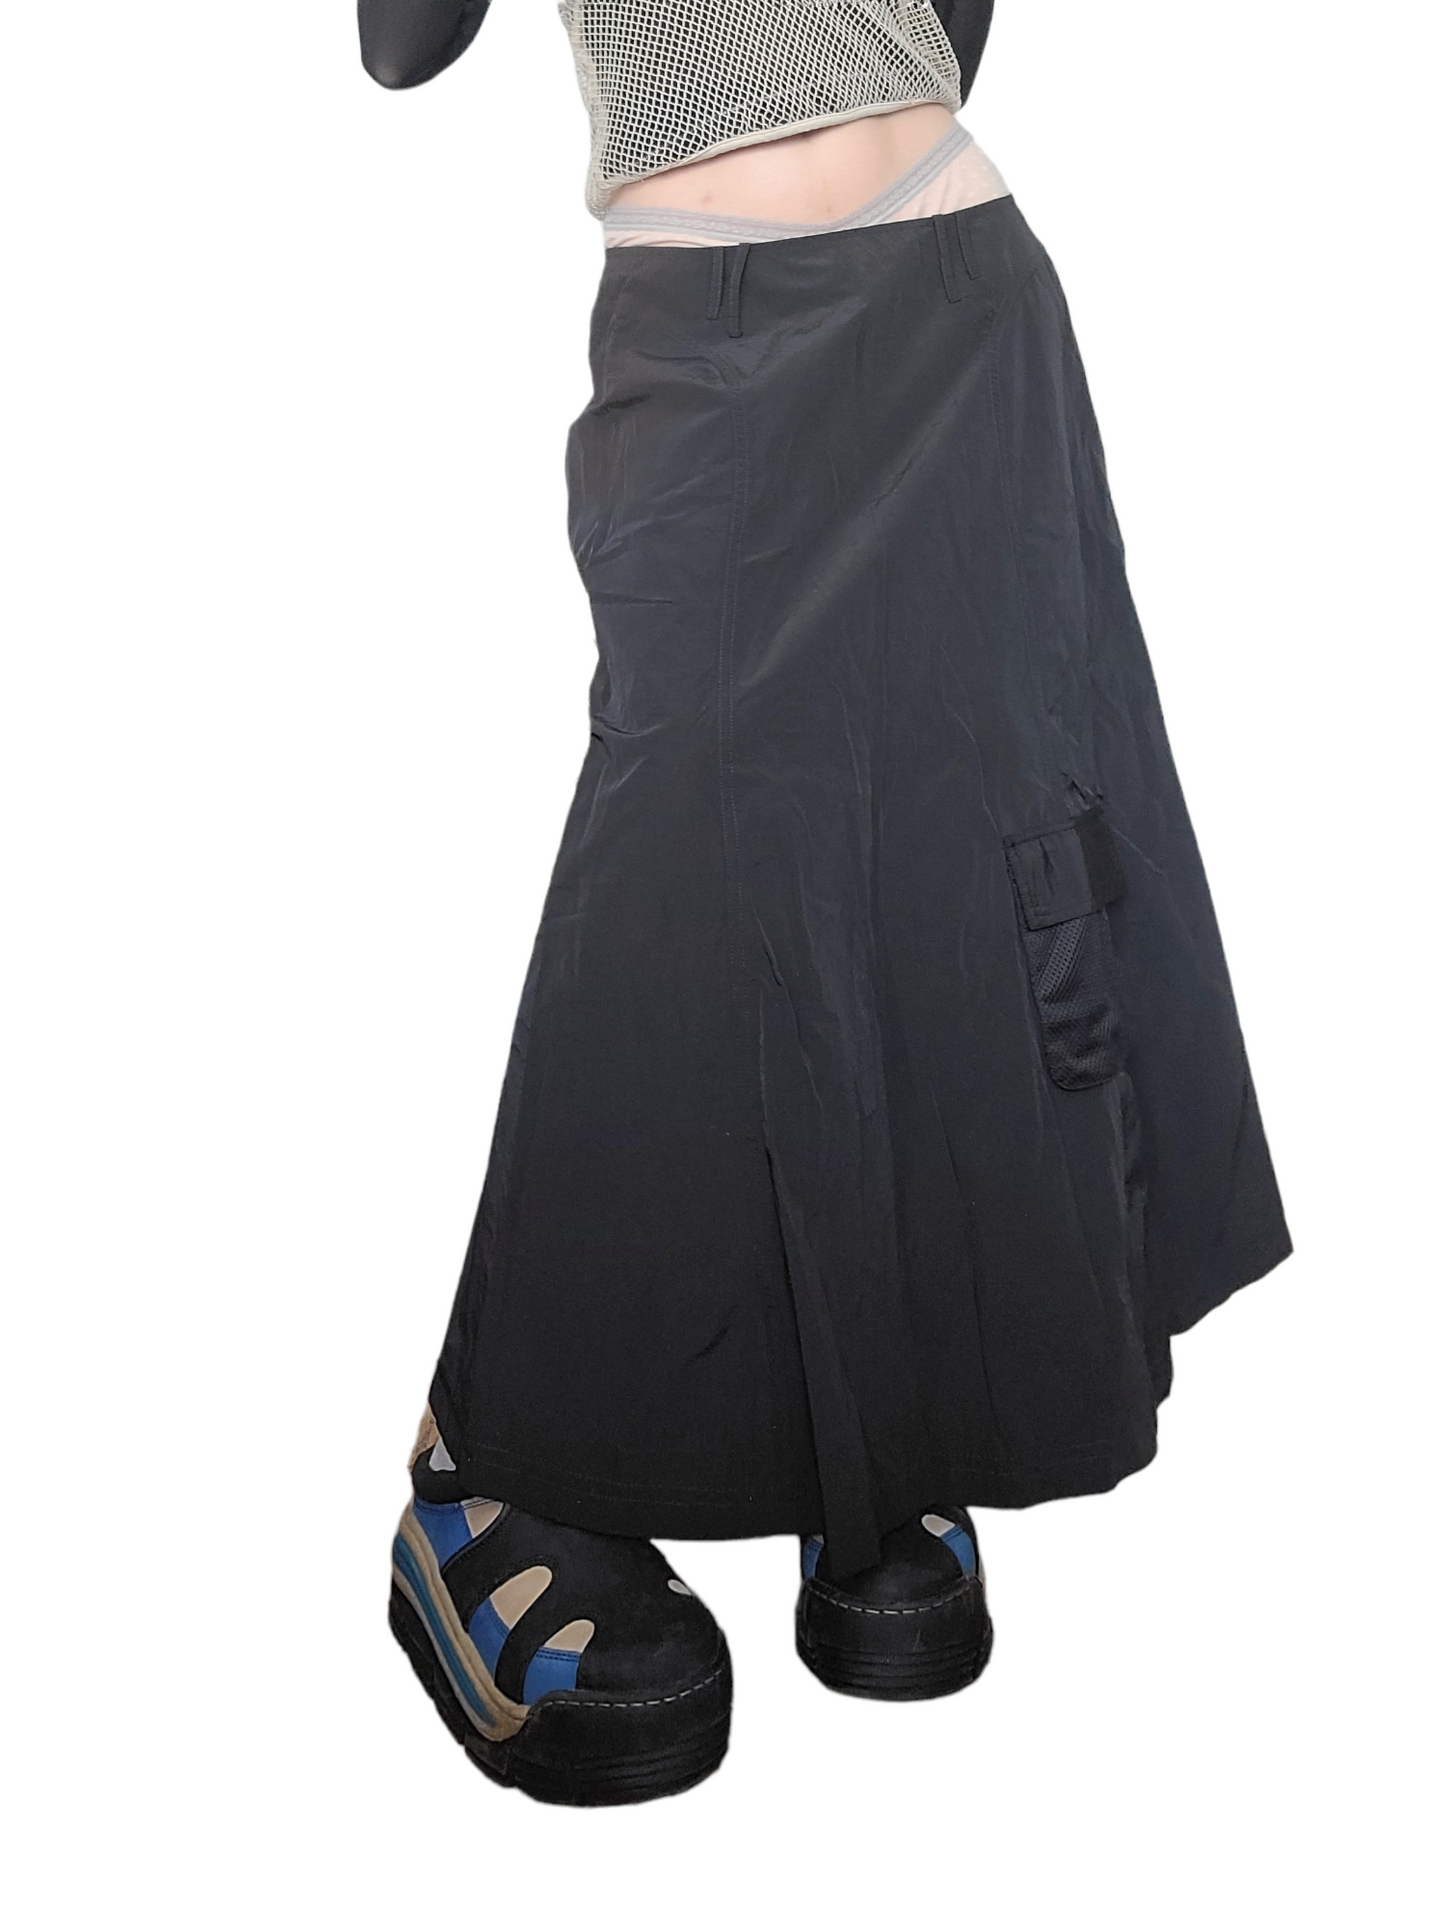 Maxi skirt gorpcore parachute techwear subversive basics dystopian post apo futuristic rave cybery2k archive fashion